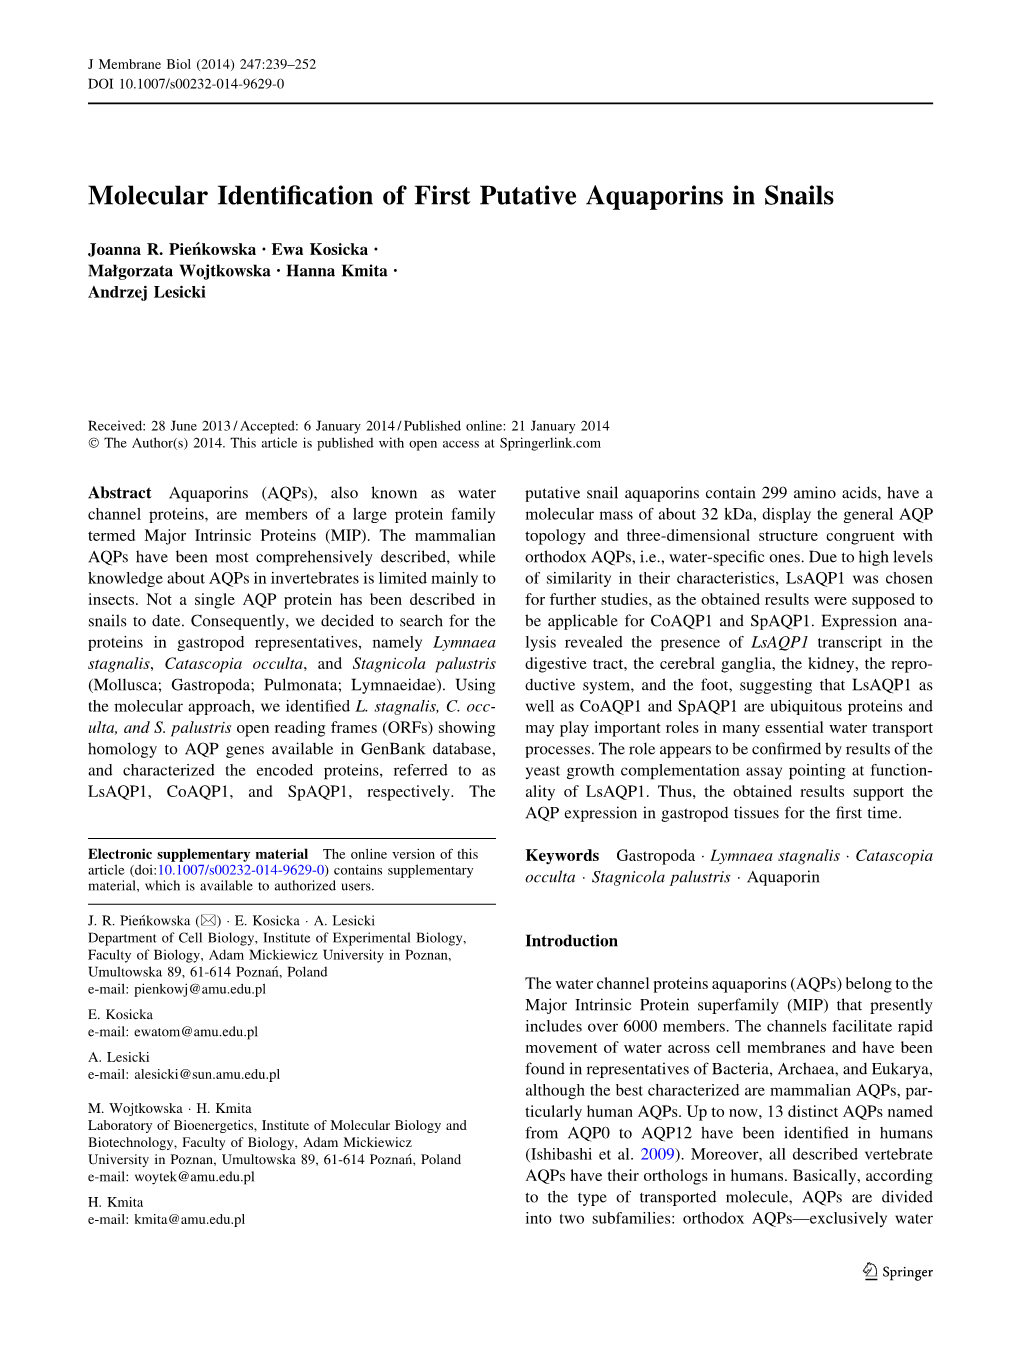 Molecular Identification of First Putative Aquaporins